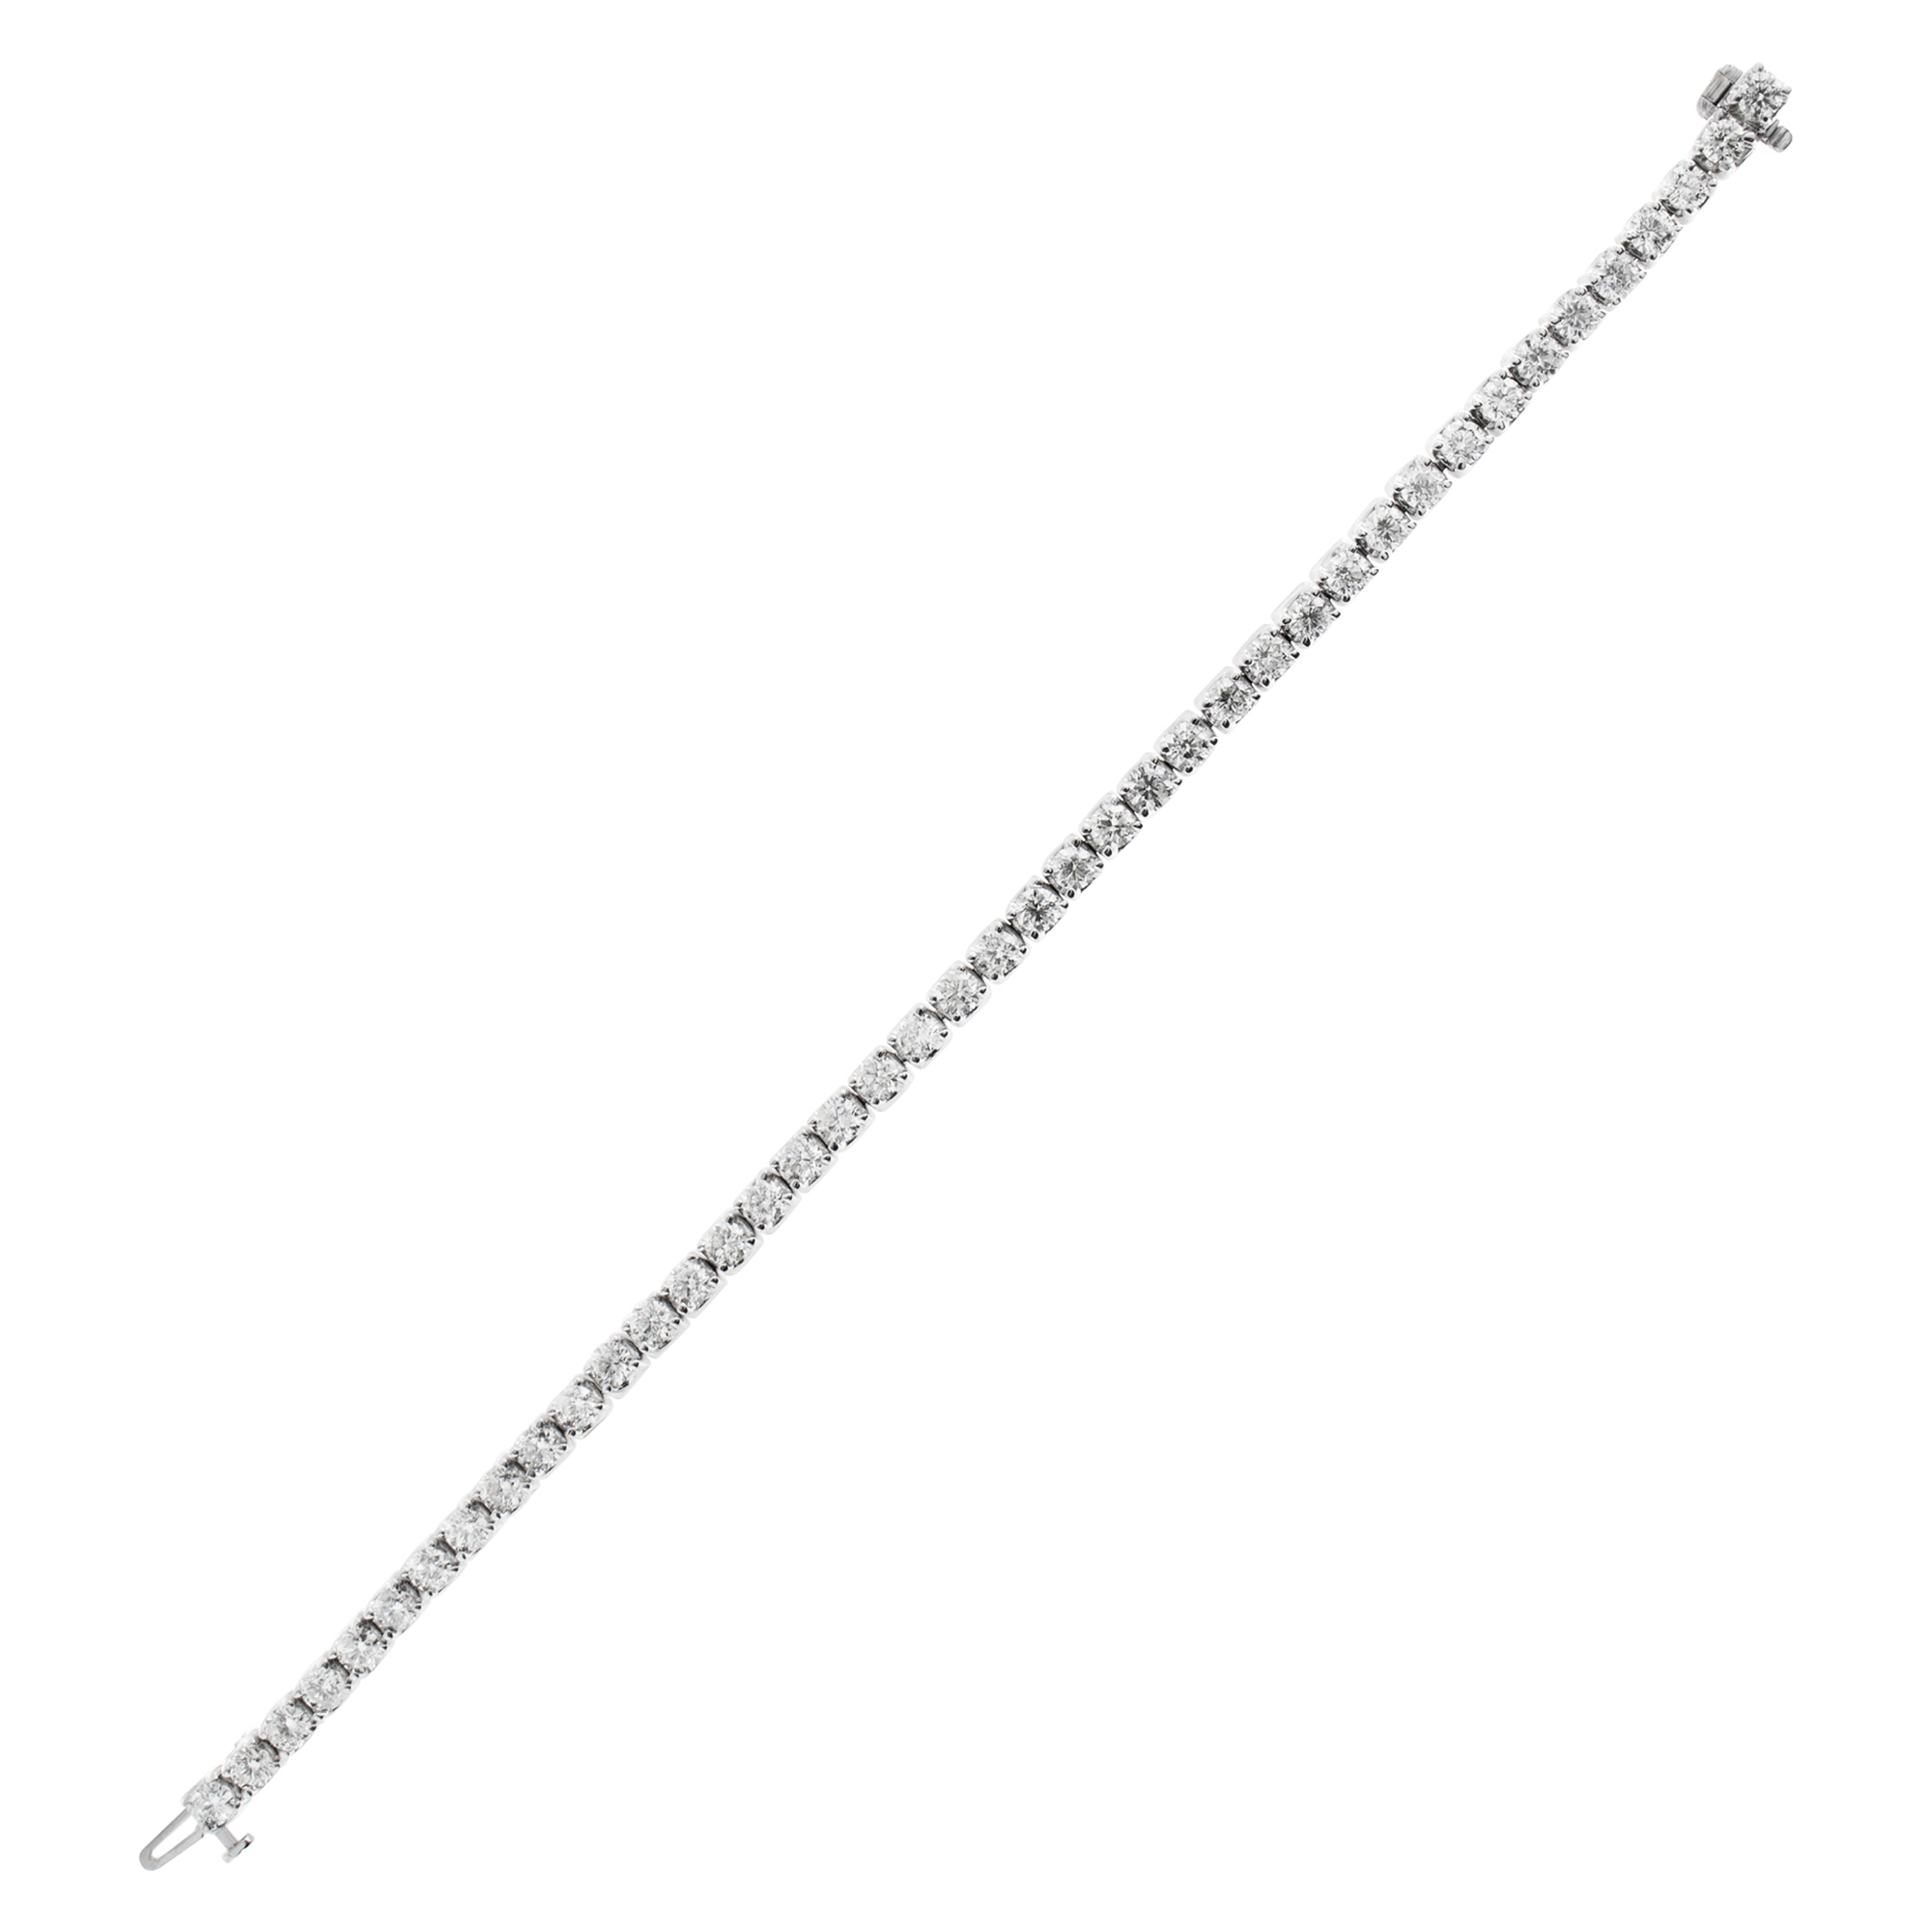 Sparkling line diamond bracelet with 8.09 carat full cut round diamonds set in 14K white gold image 6